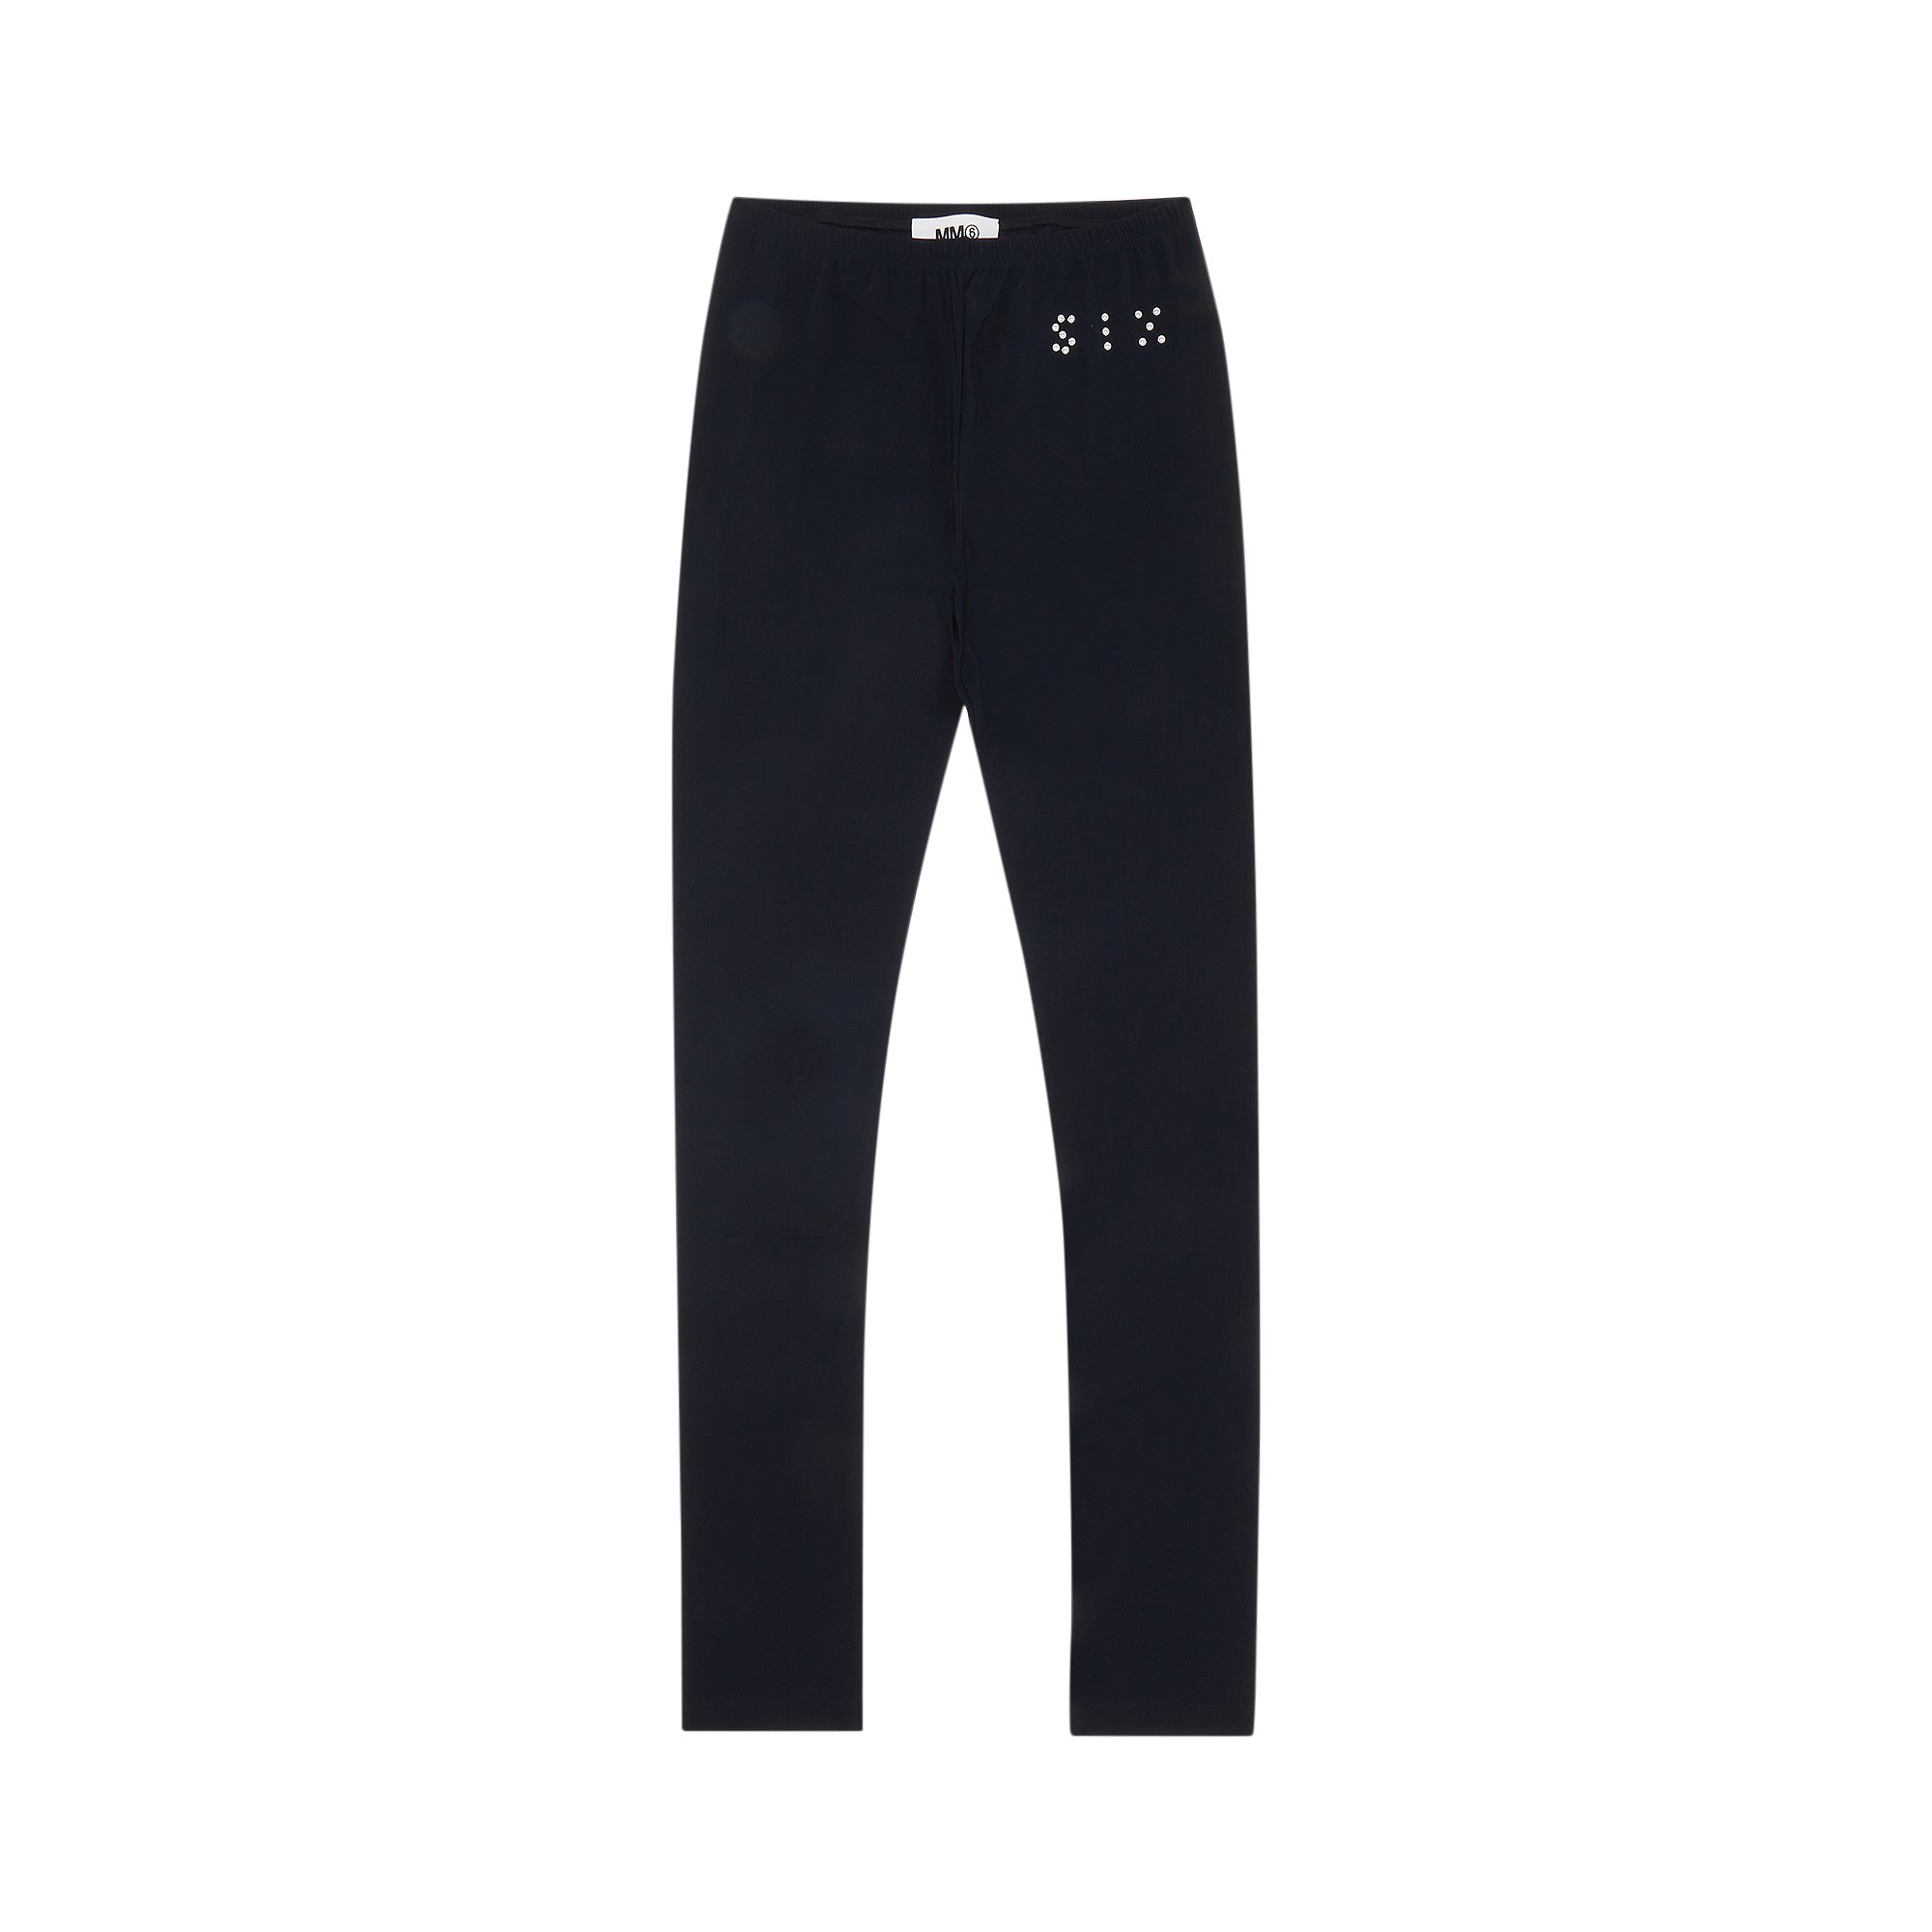 Buy MM6 Maison Margiela Pants 'Black' - S62KB0136 S20518 900 | GOAT